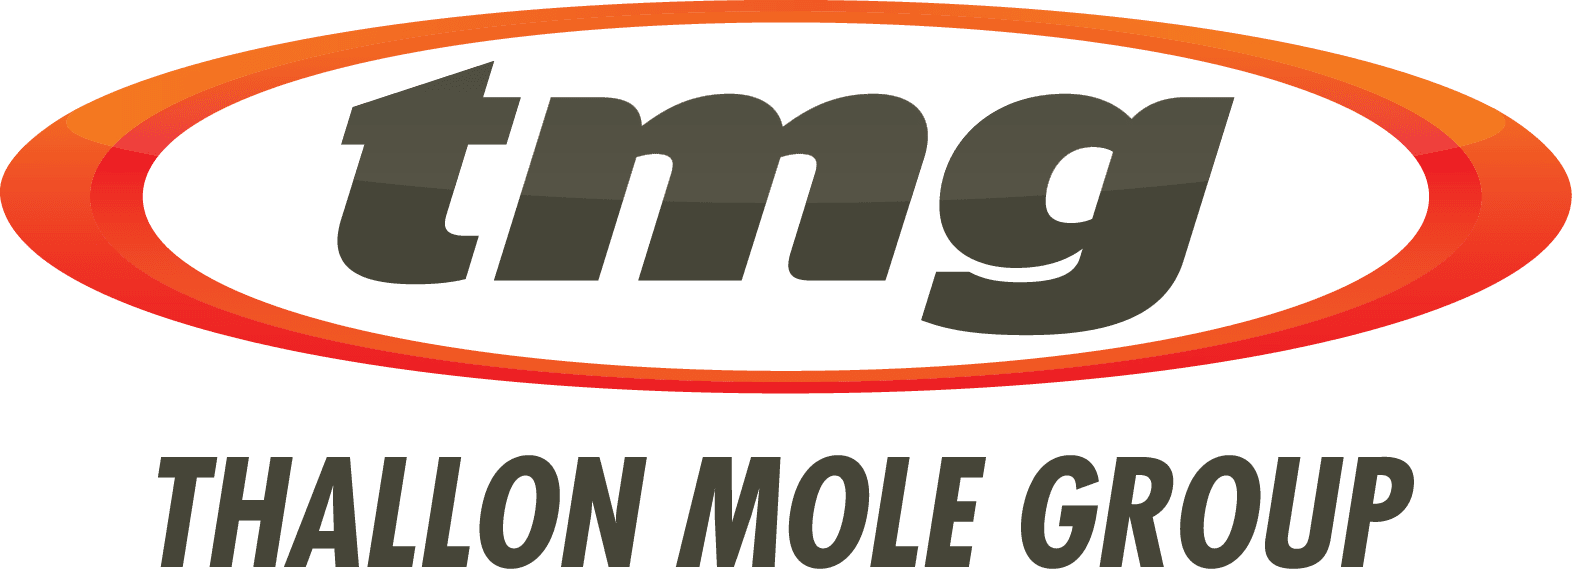 TMG_Logo_New